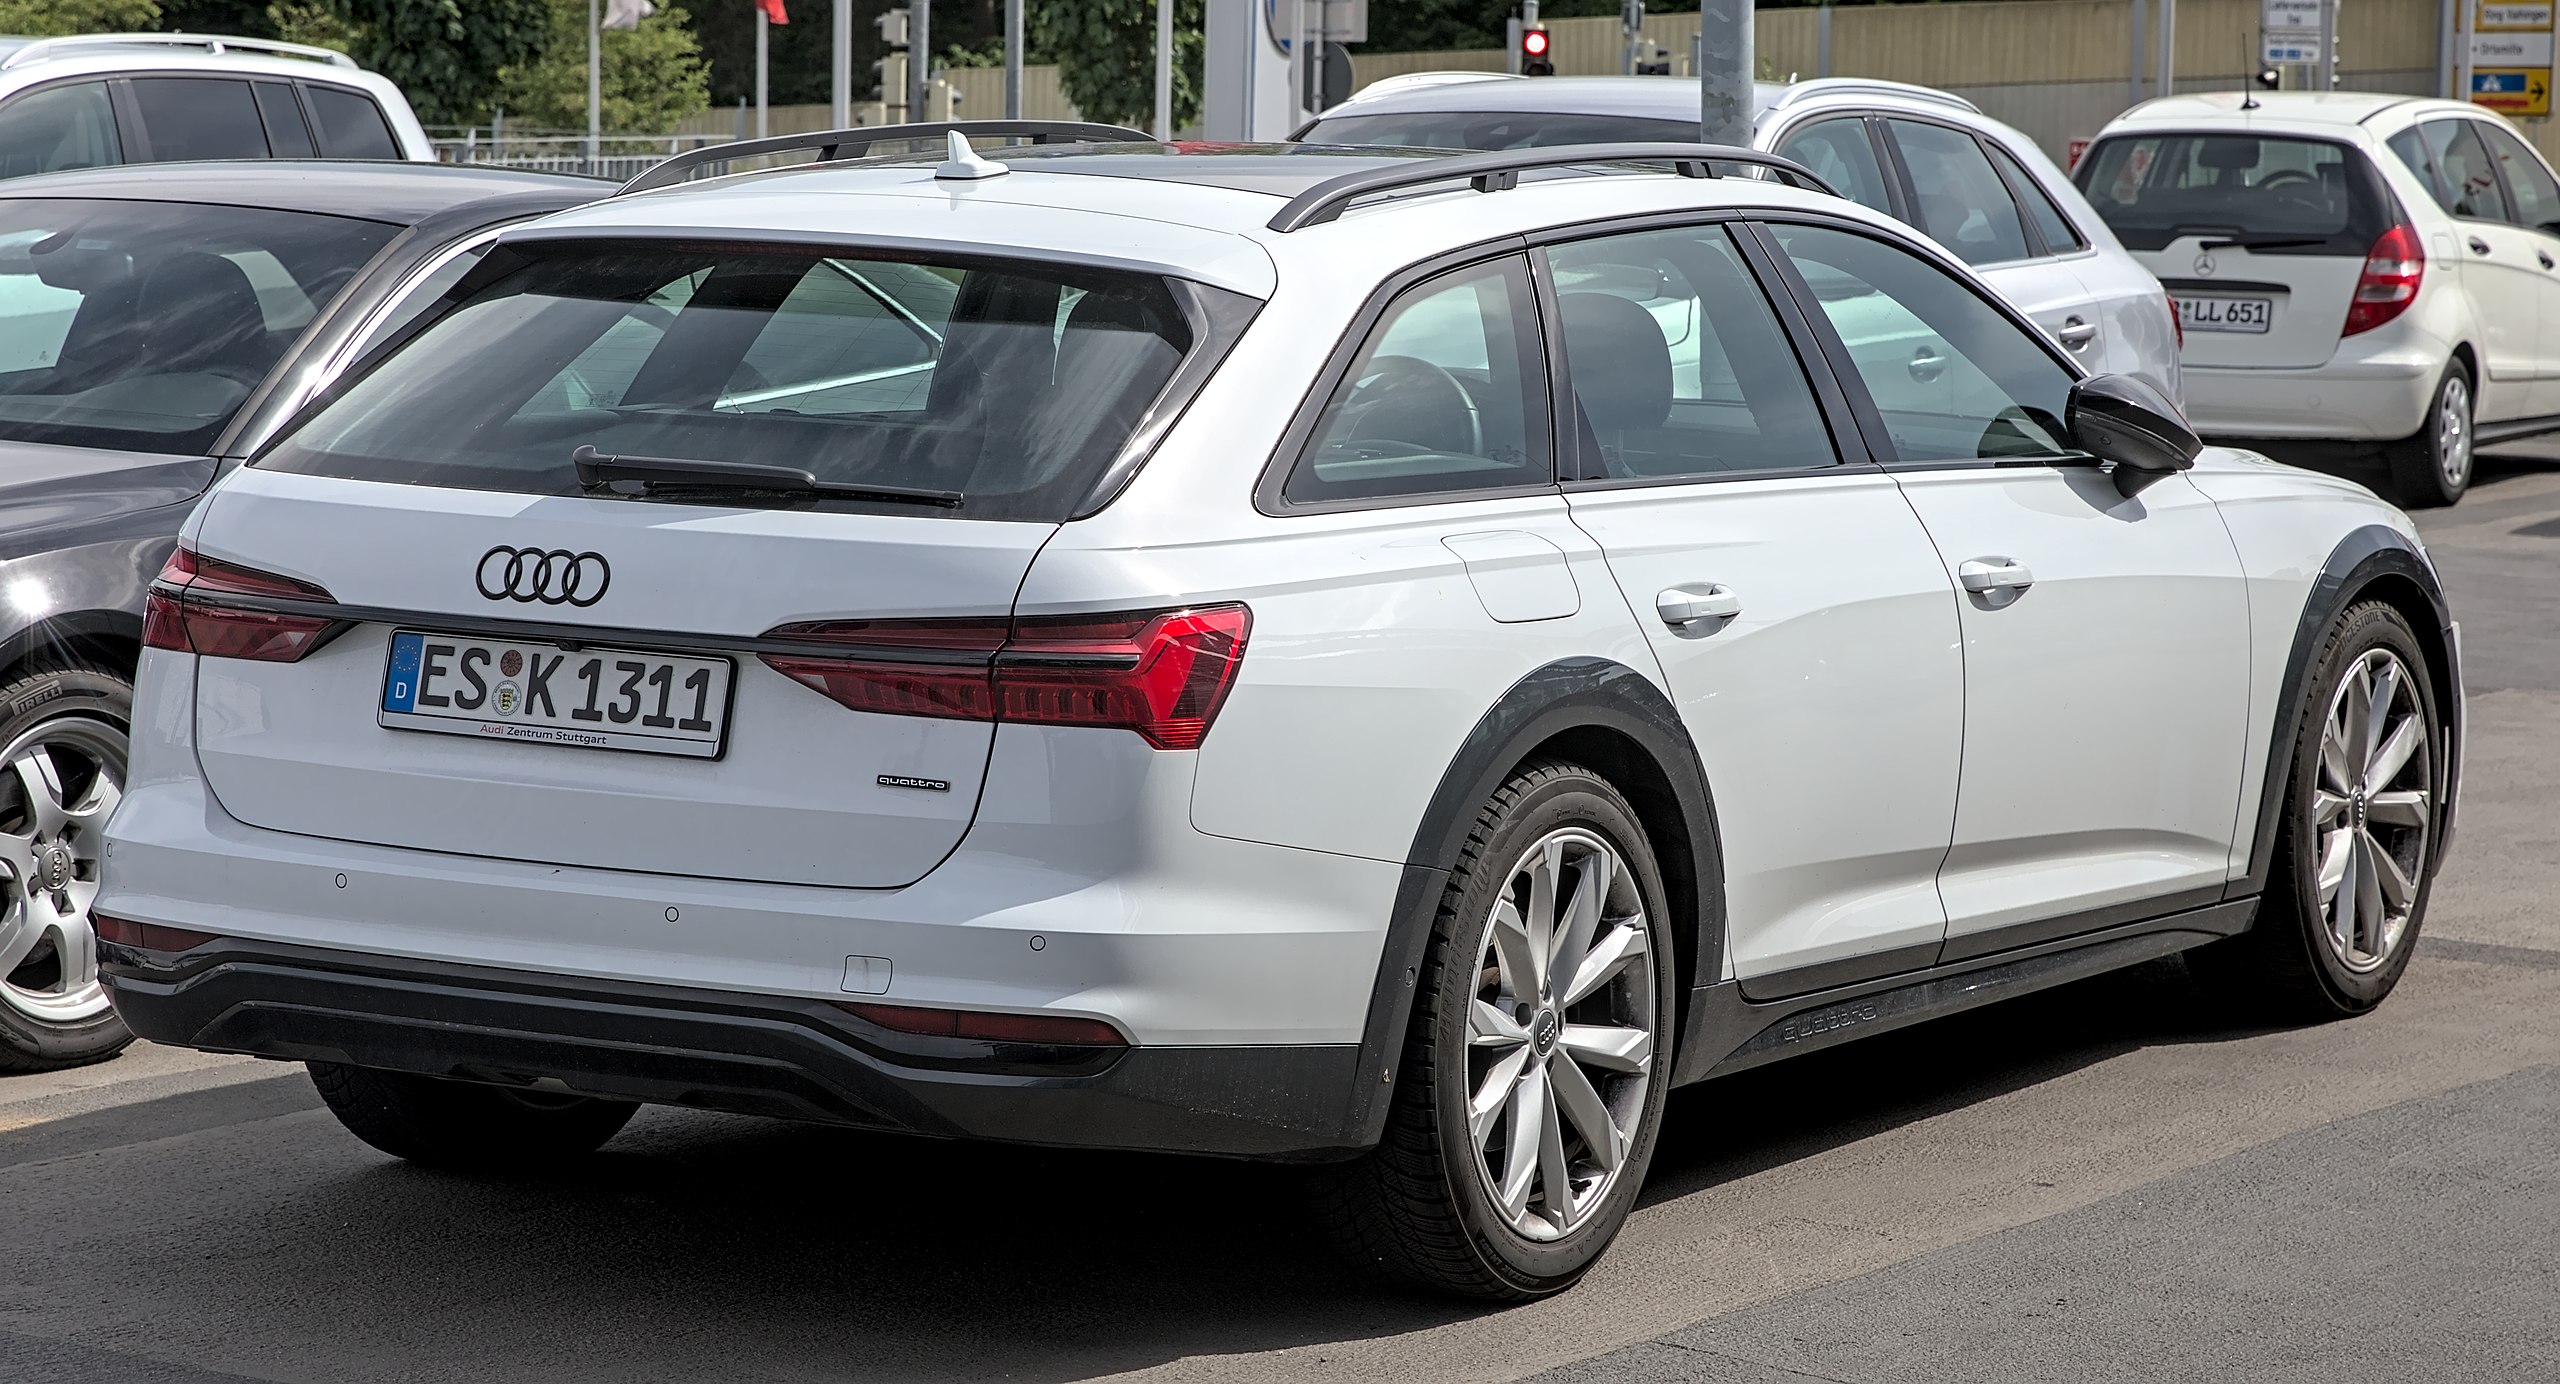 Audi A6 Allroad exterior - Rear Left Angled